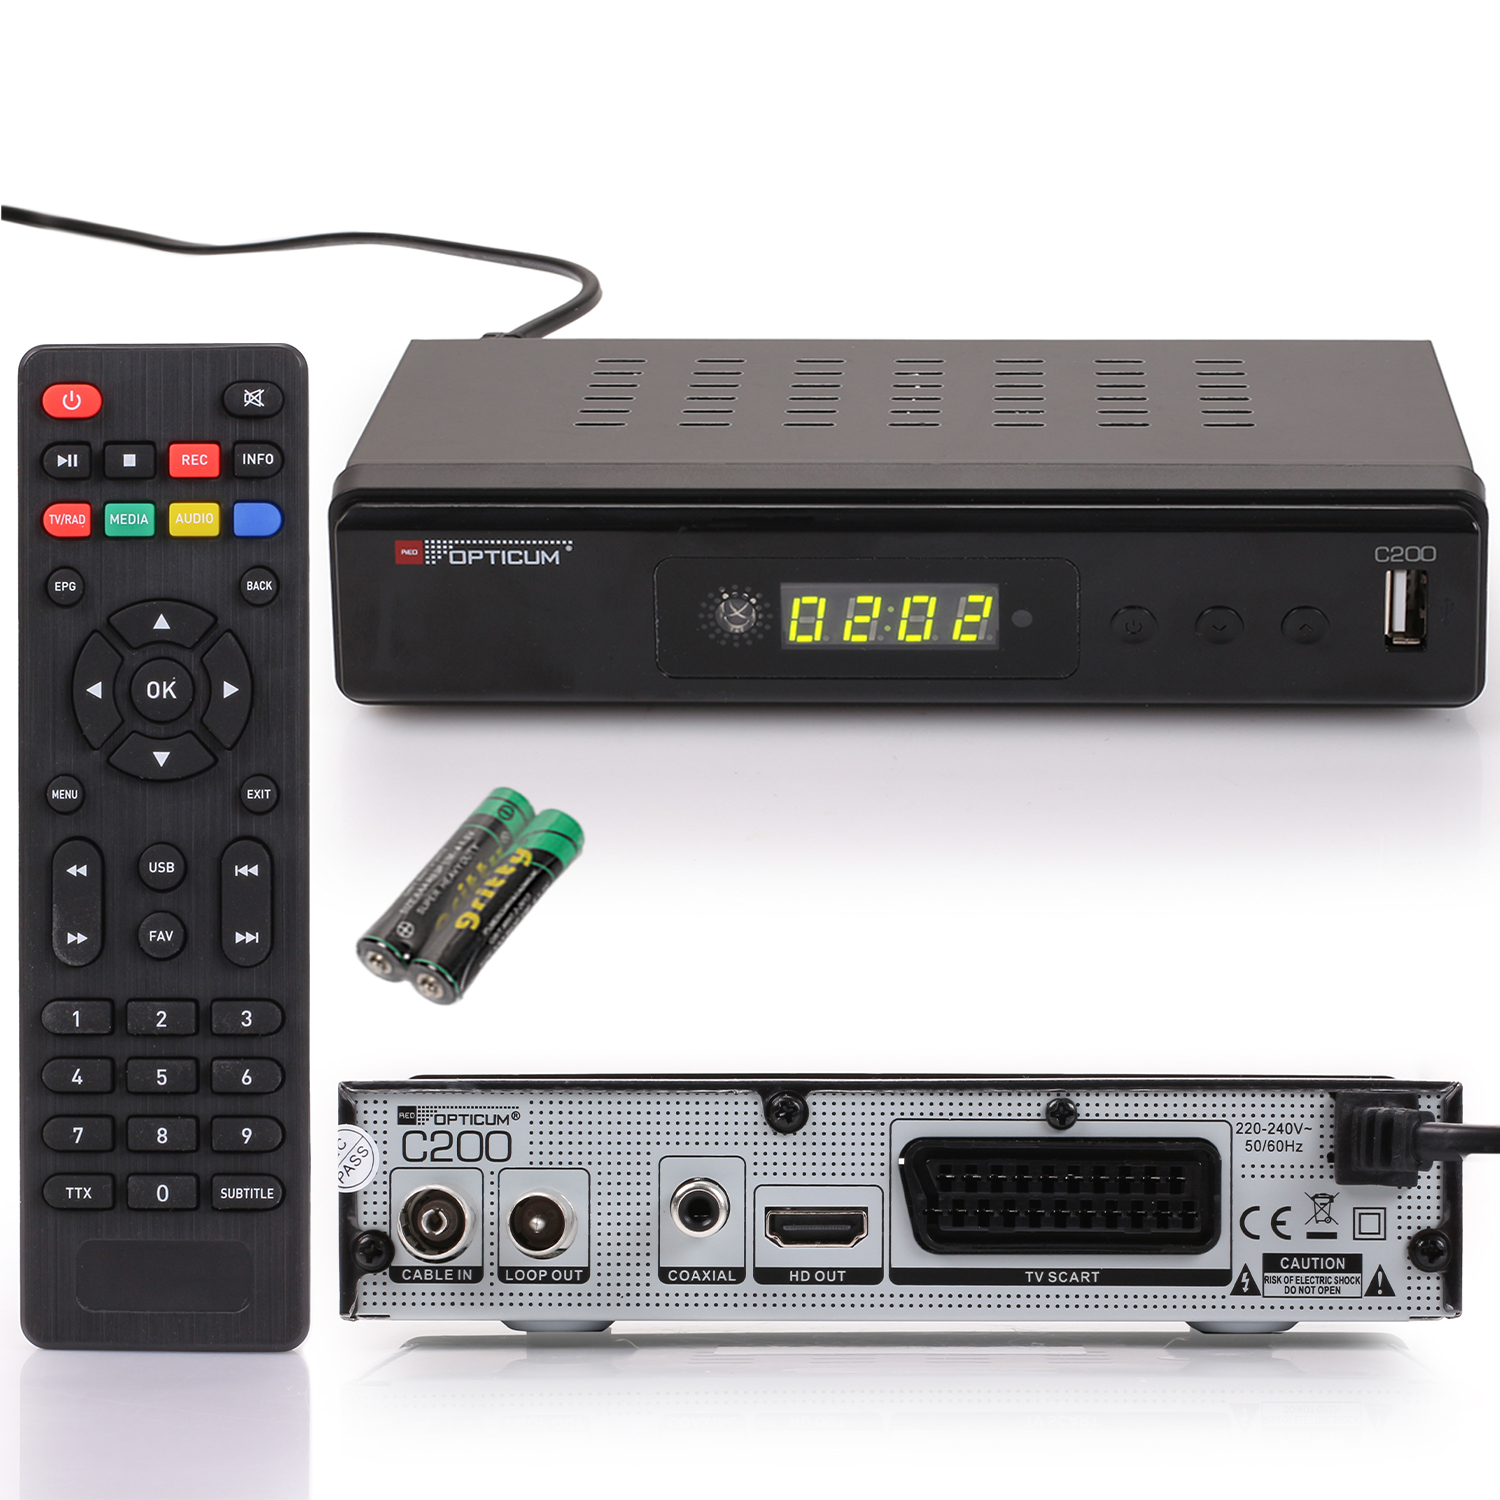 Aufnahmefunktion schwarz) Kabel-Receiver - mit Receiver Kabelreceiver HD RED DVB-C2, PVR-Funktion, DVB-C - HDMI-USB-SCART OPTICUM HD I PVR (HDTV, EPG C200 Digitaler DVB-C,